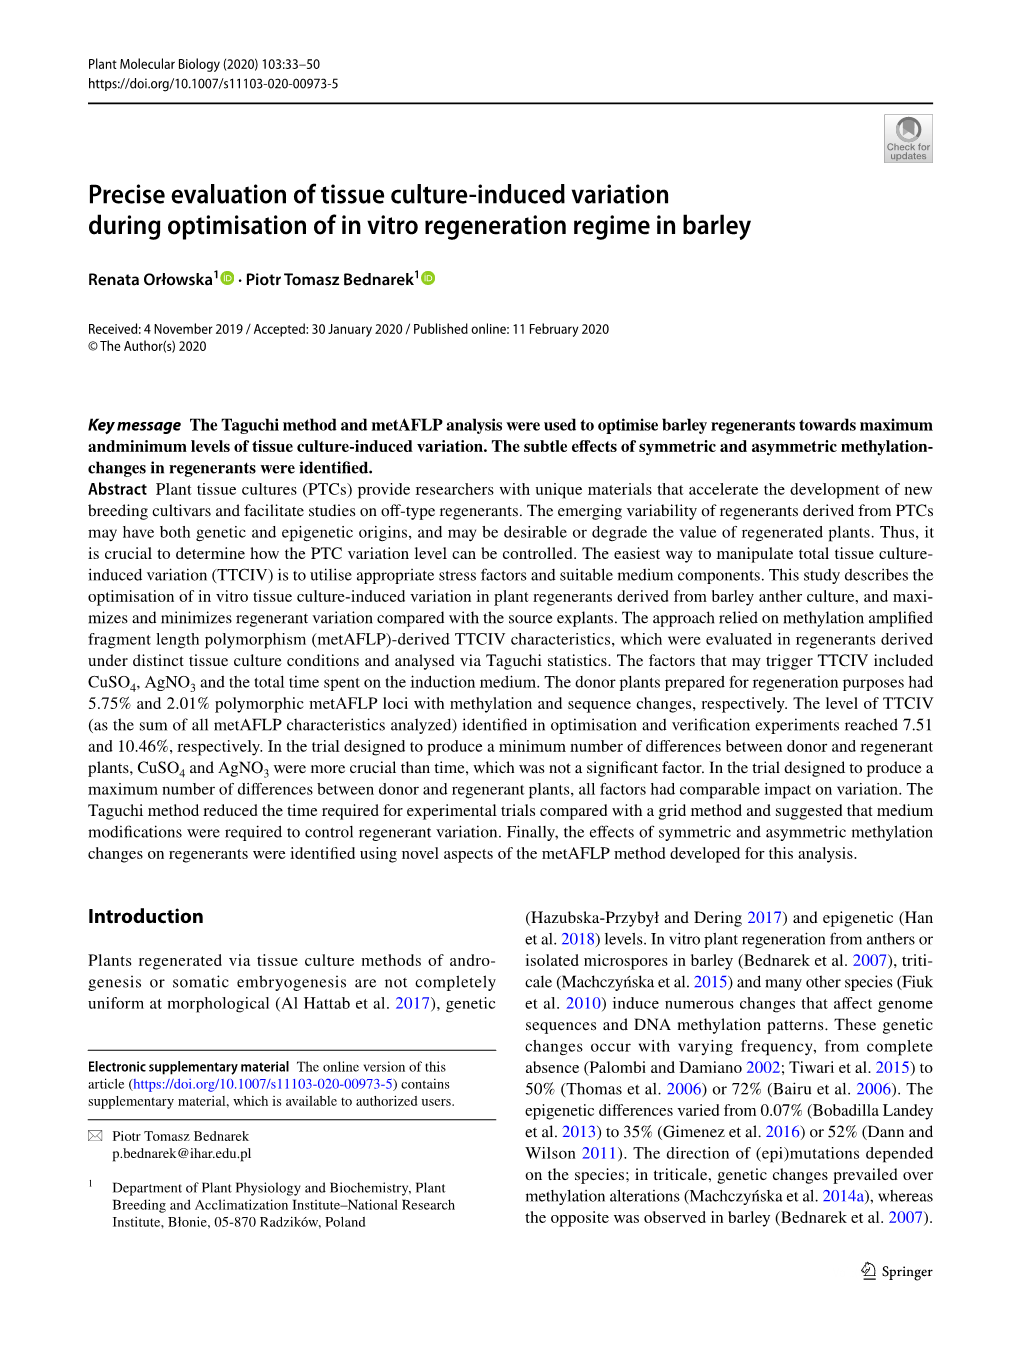 Precise Evaluation of Tissue Culture-Induced Variation During Optimisation of in Vitro Regeneration Regime in Barley